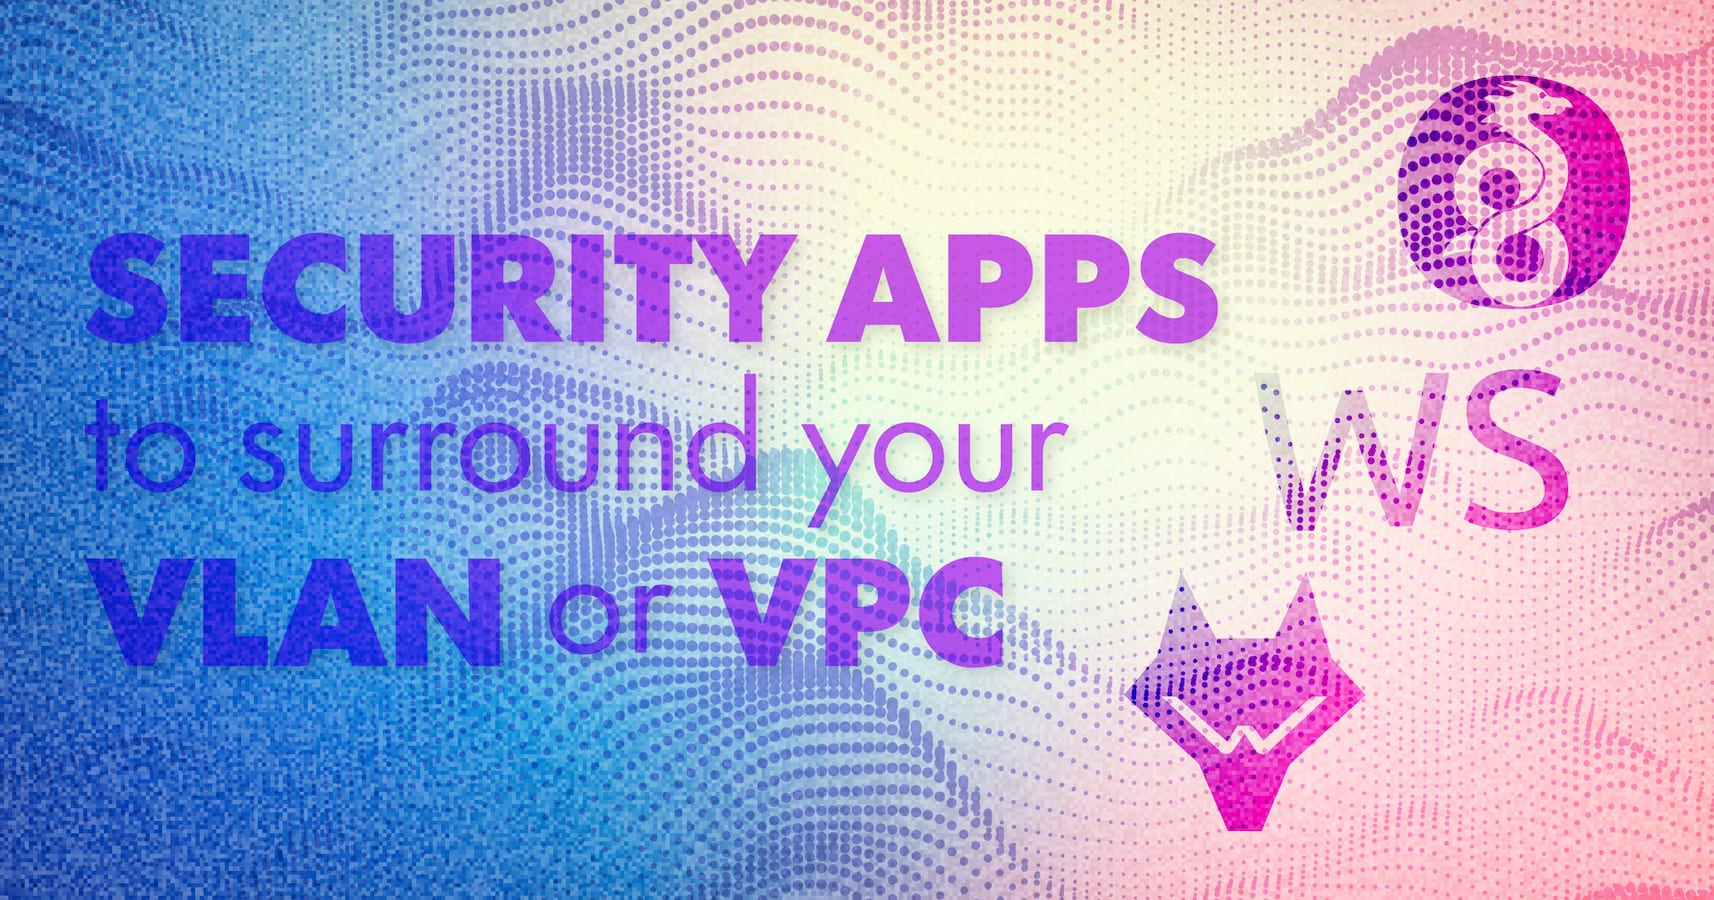 VLAN 또는 VPC를 둘러싸는 보안 앱